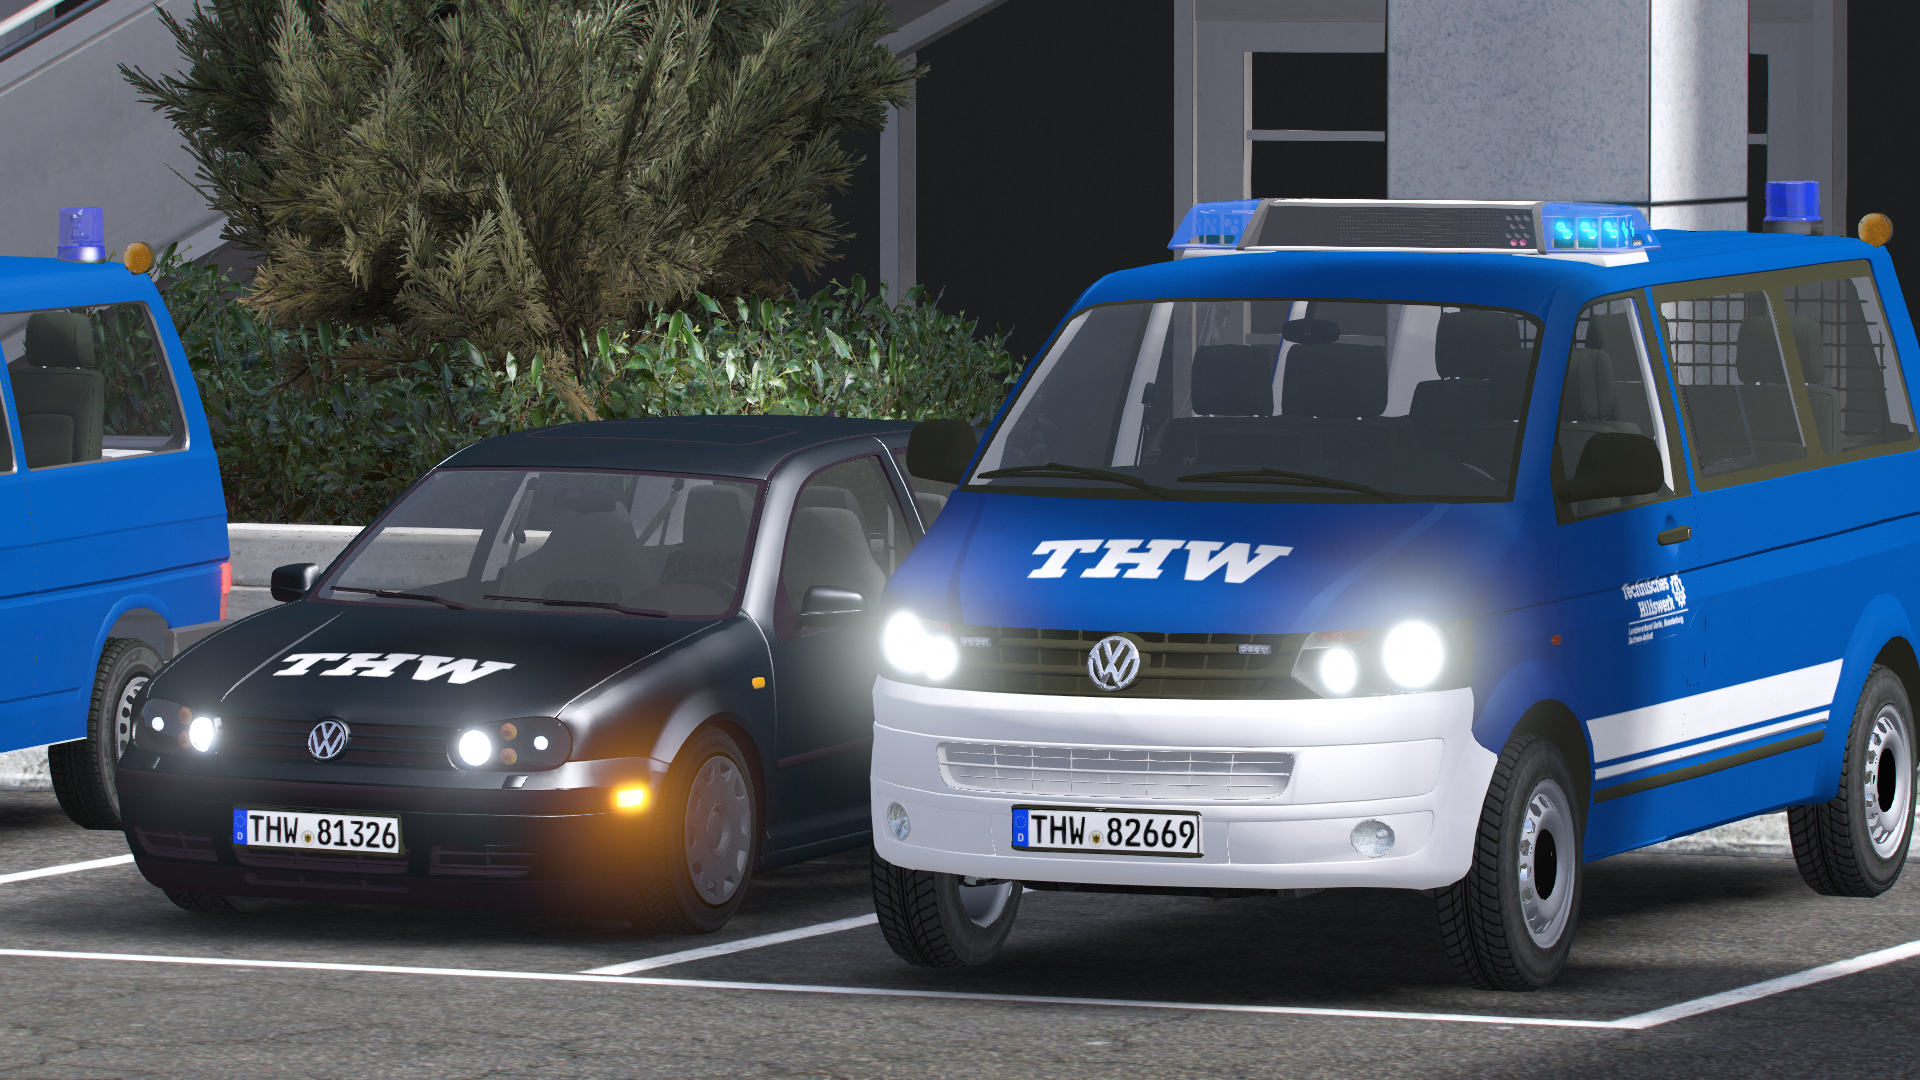 File:LED-Blaulicht-VW-T5.jpg - Wikipedia